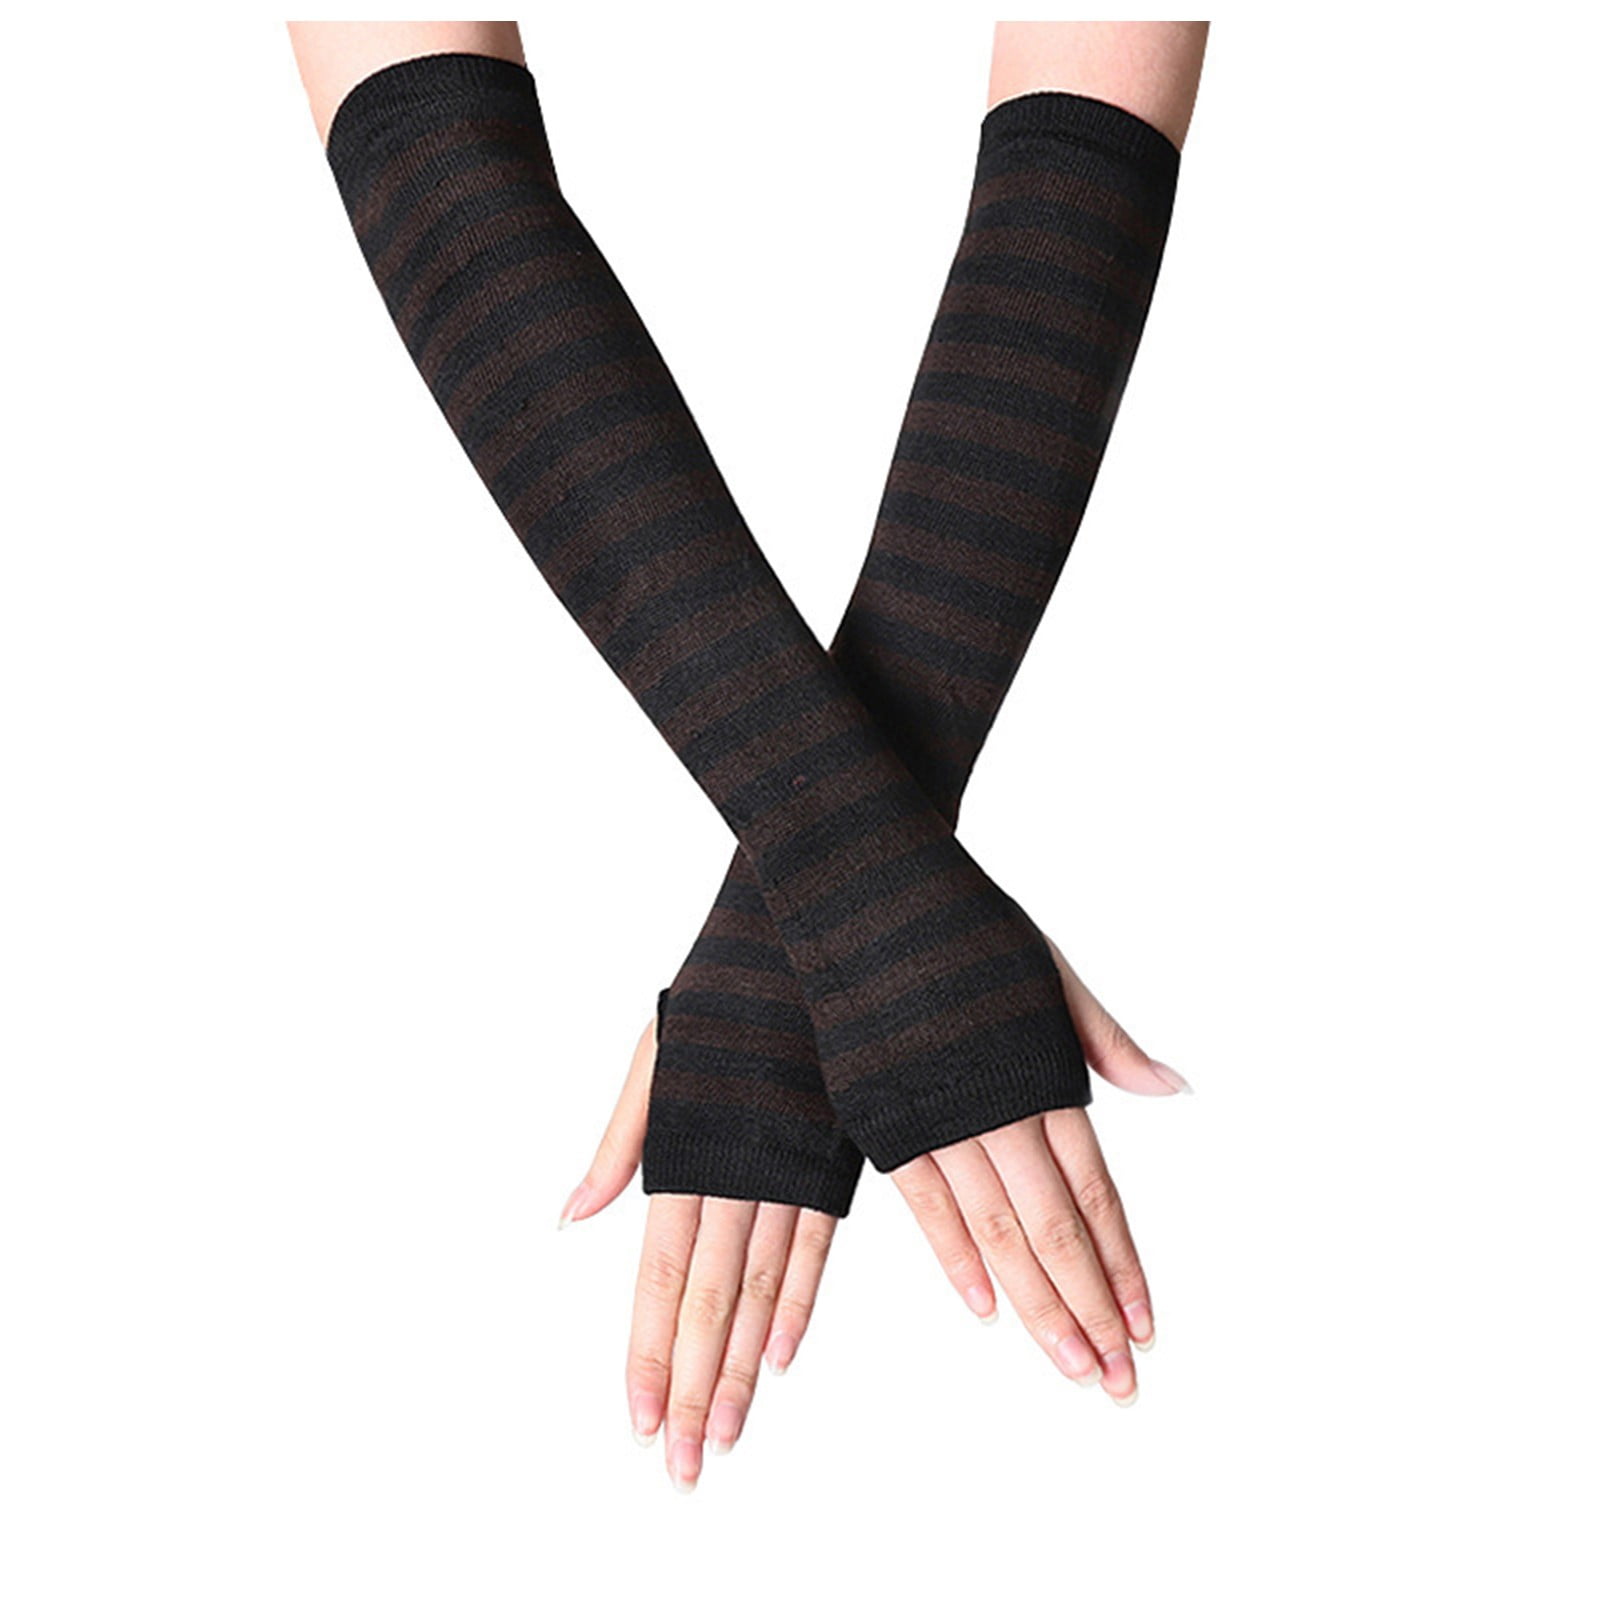 X Long black spandex fingerless gloves lace trim arm warmers